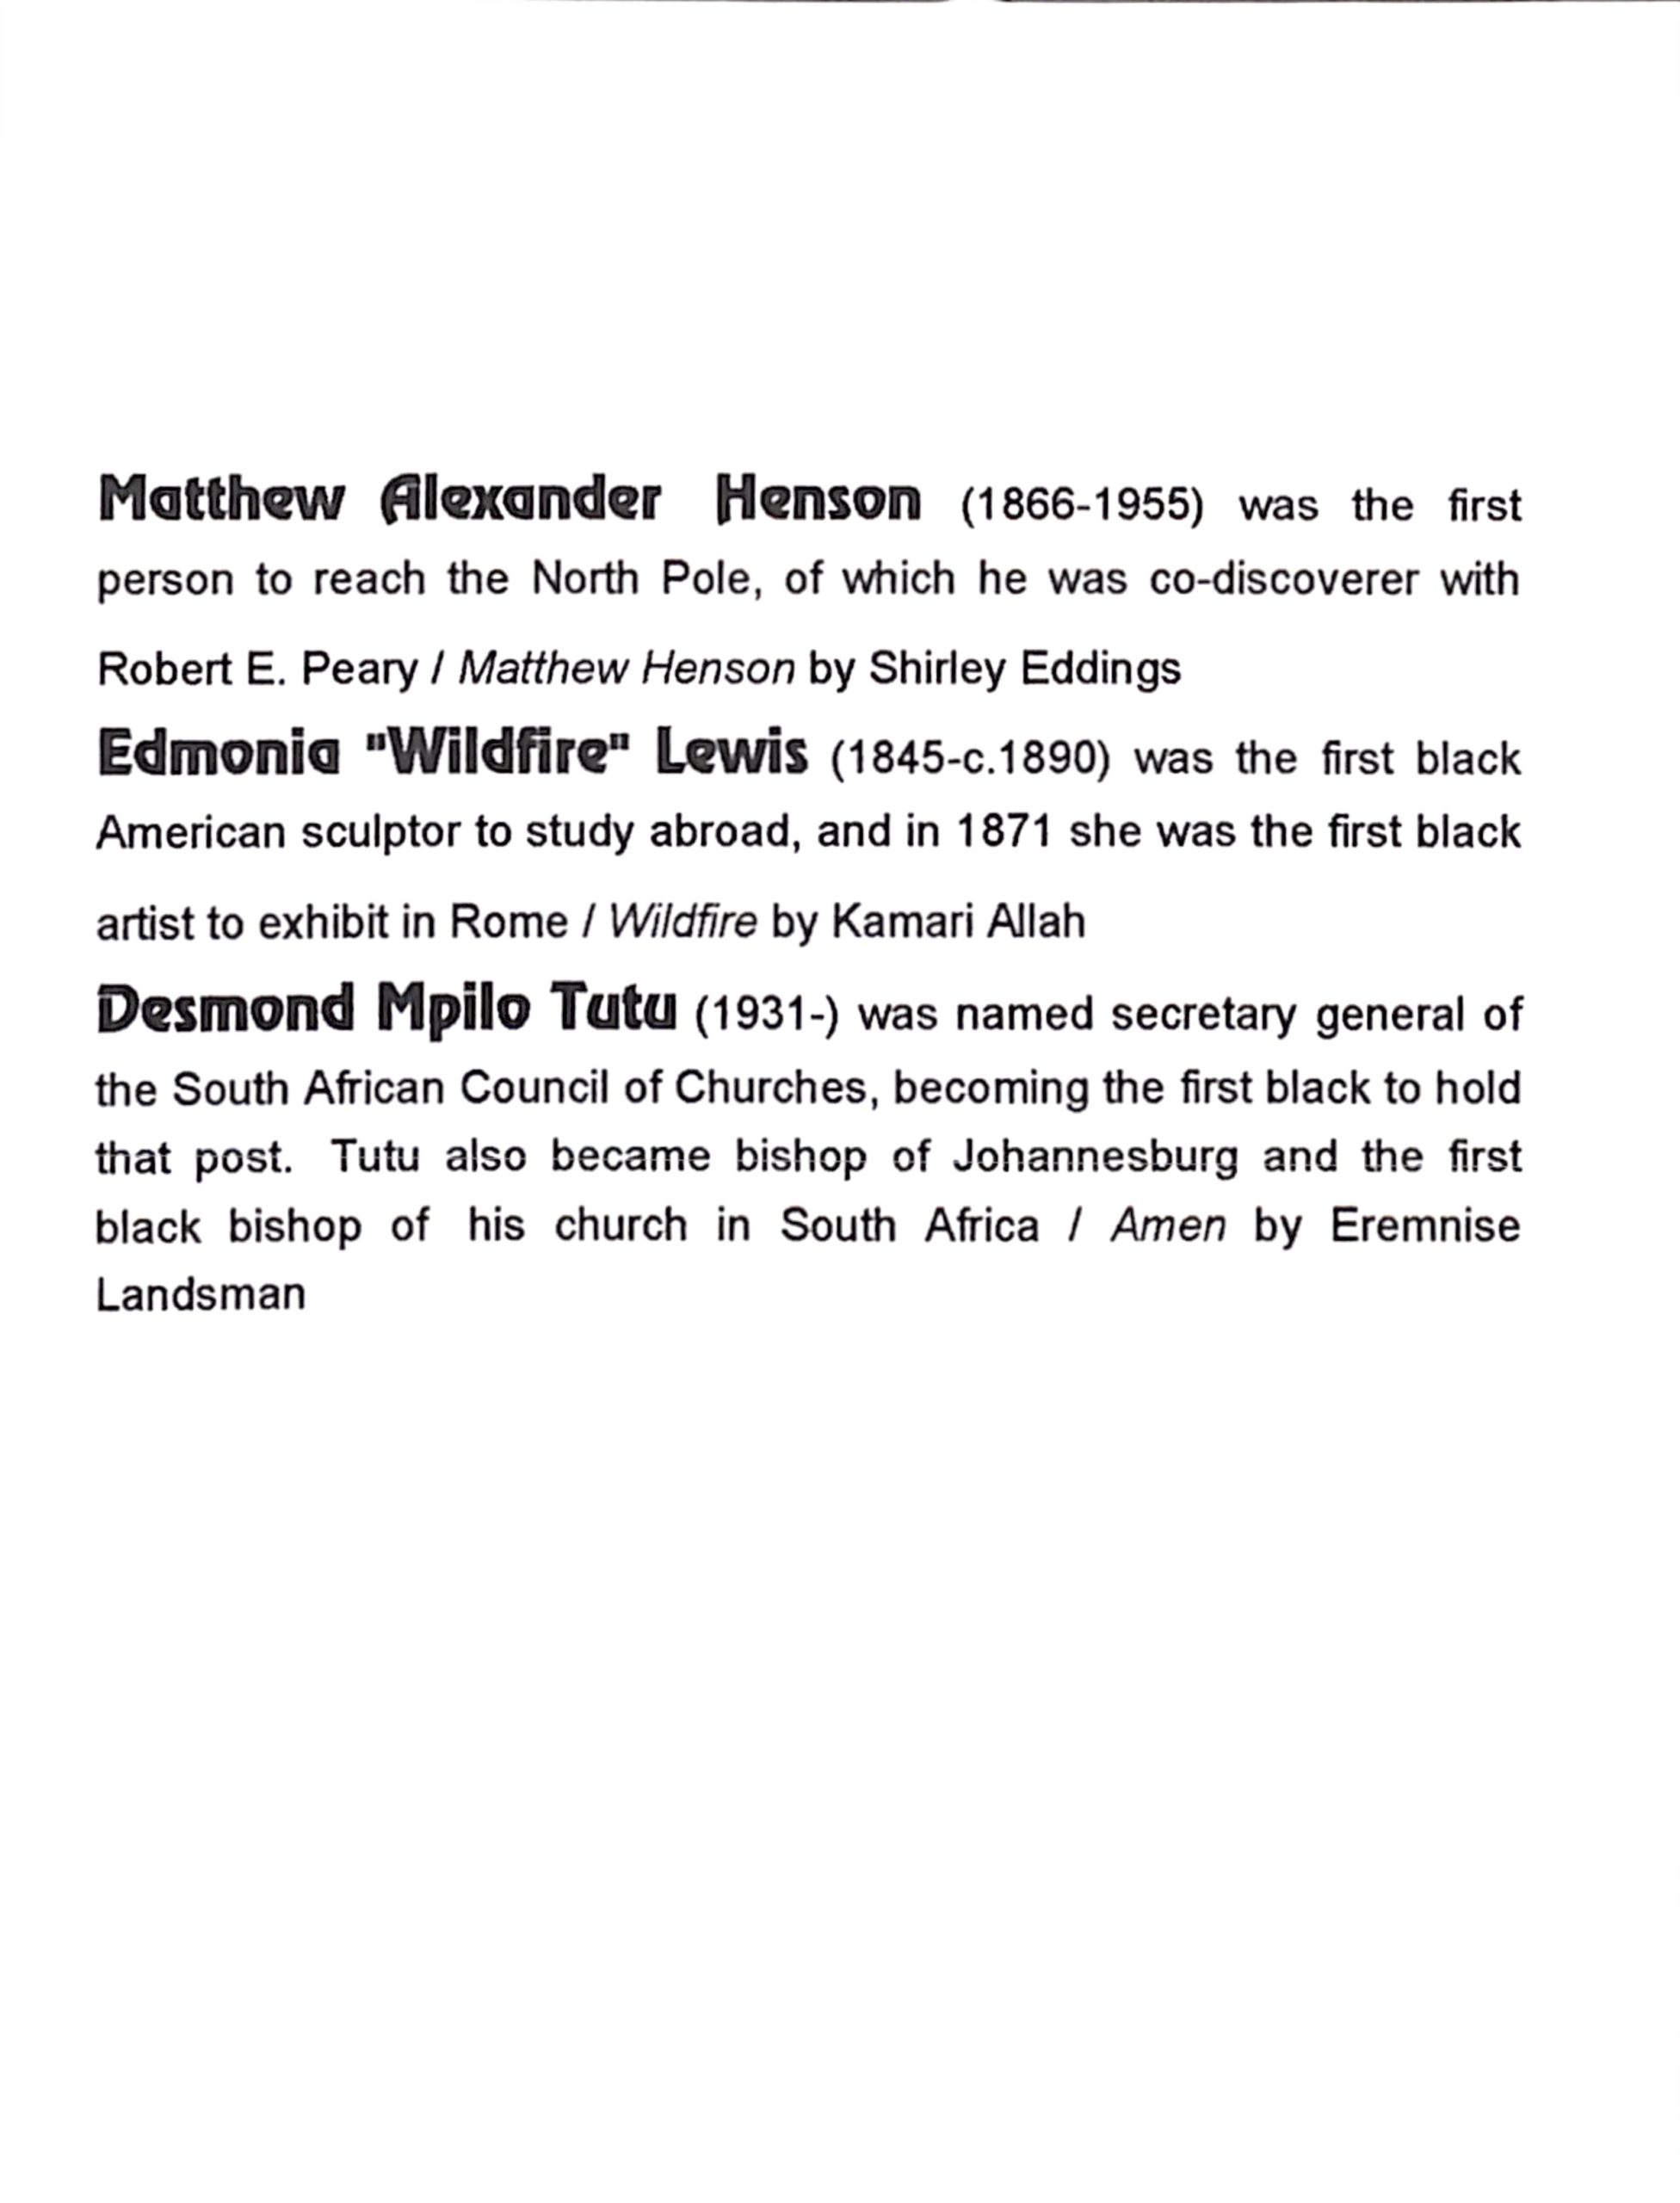 Catalogue page with descriptions of Matthew Henson, Edmonia Lewis and Desmond Tutu